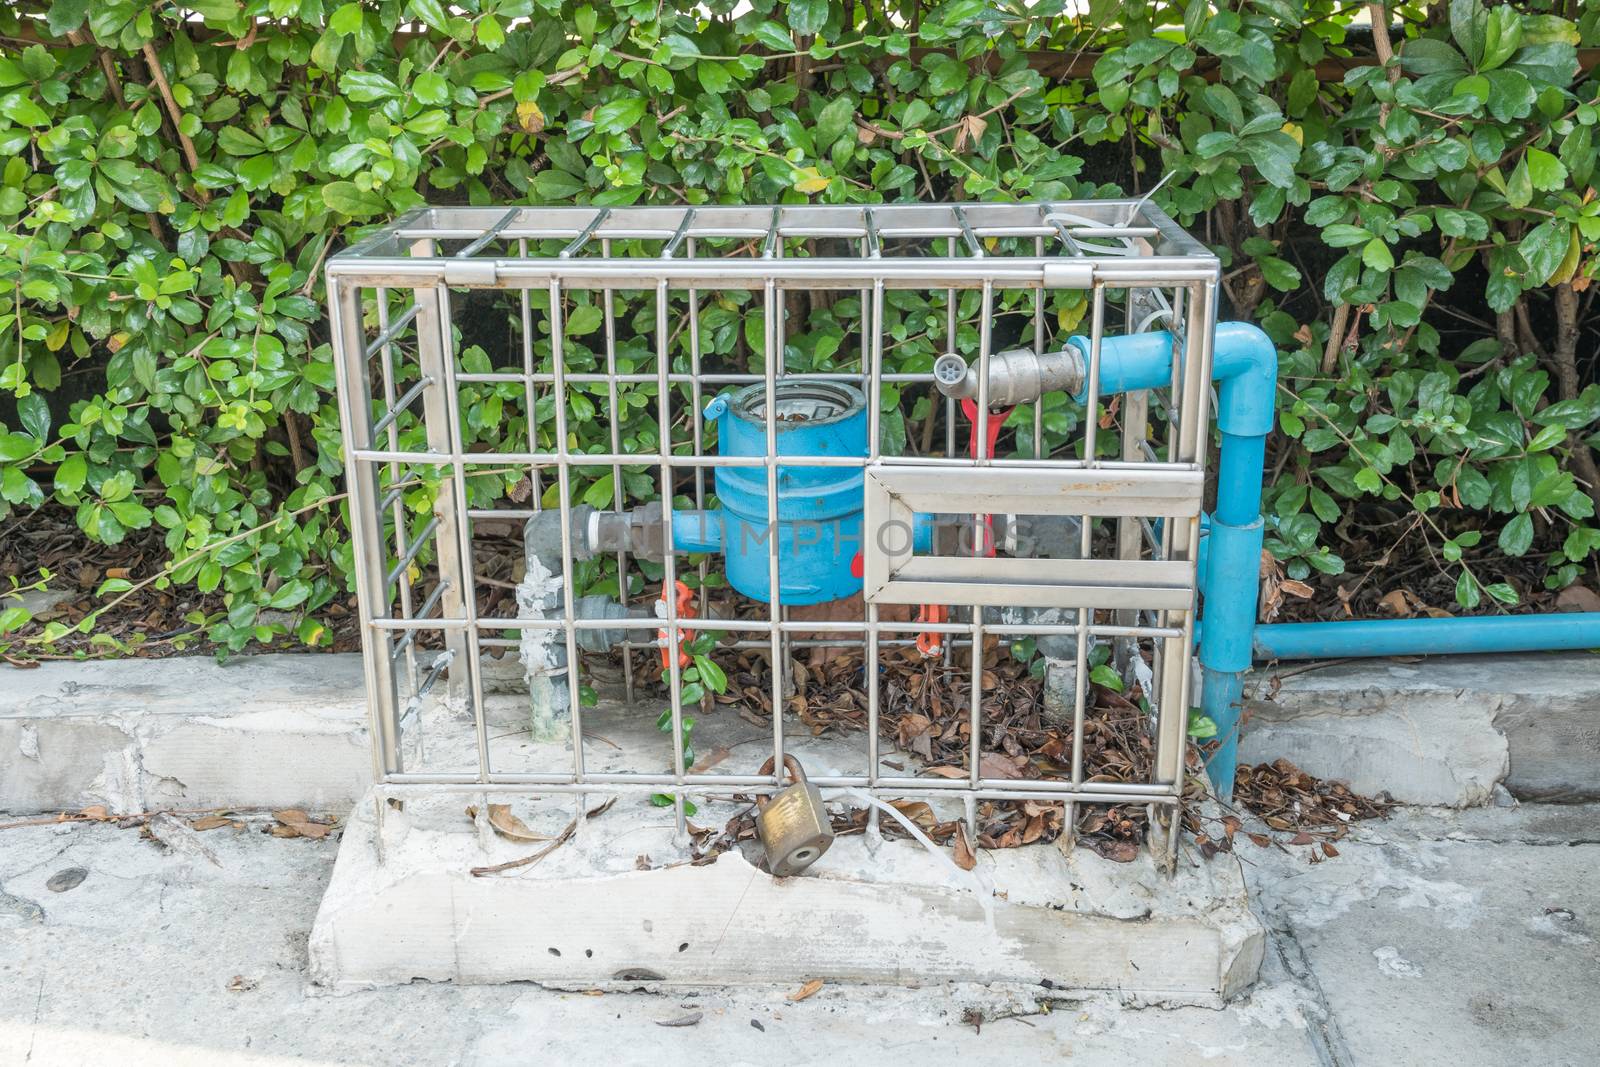 Cage meter water theft. by Soranop01